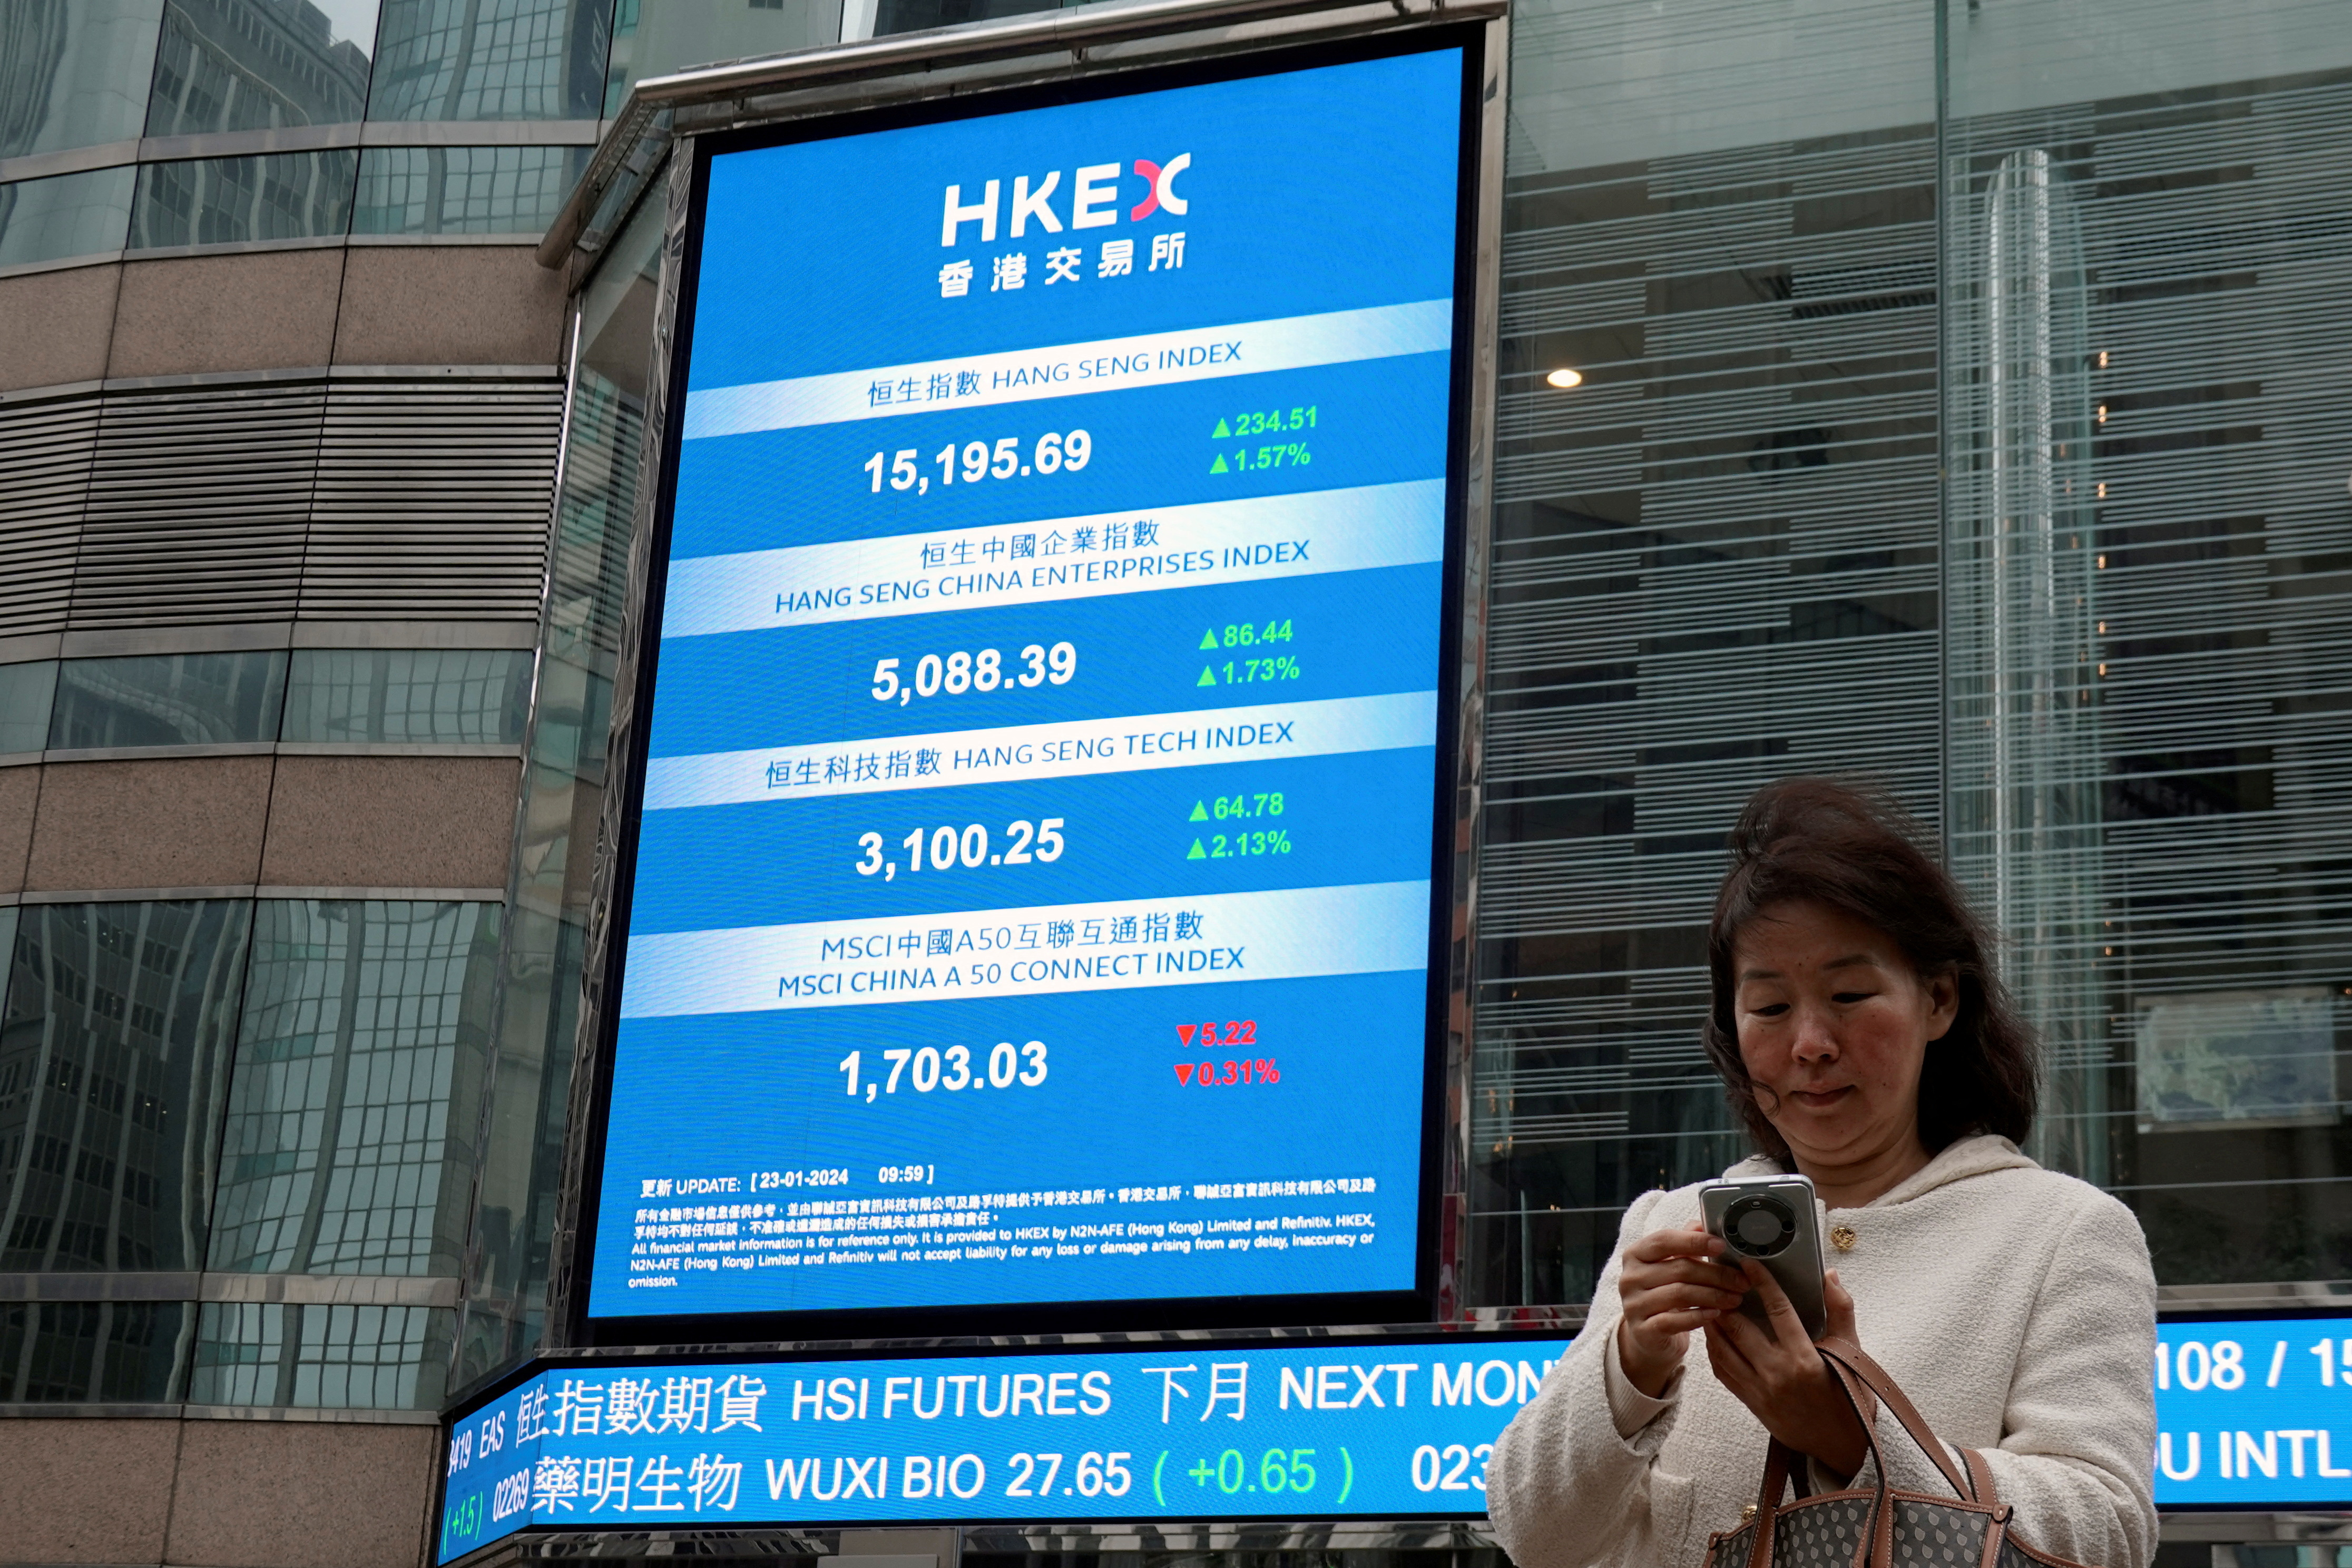 Display of stock information in Hong Kong